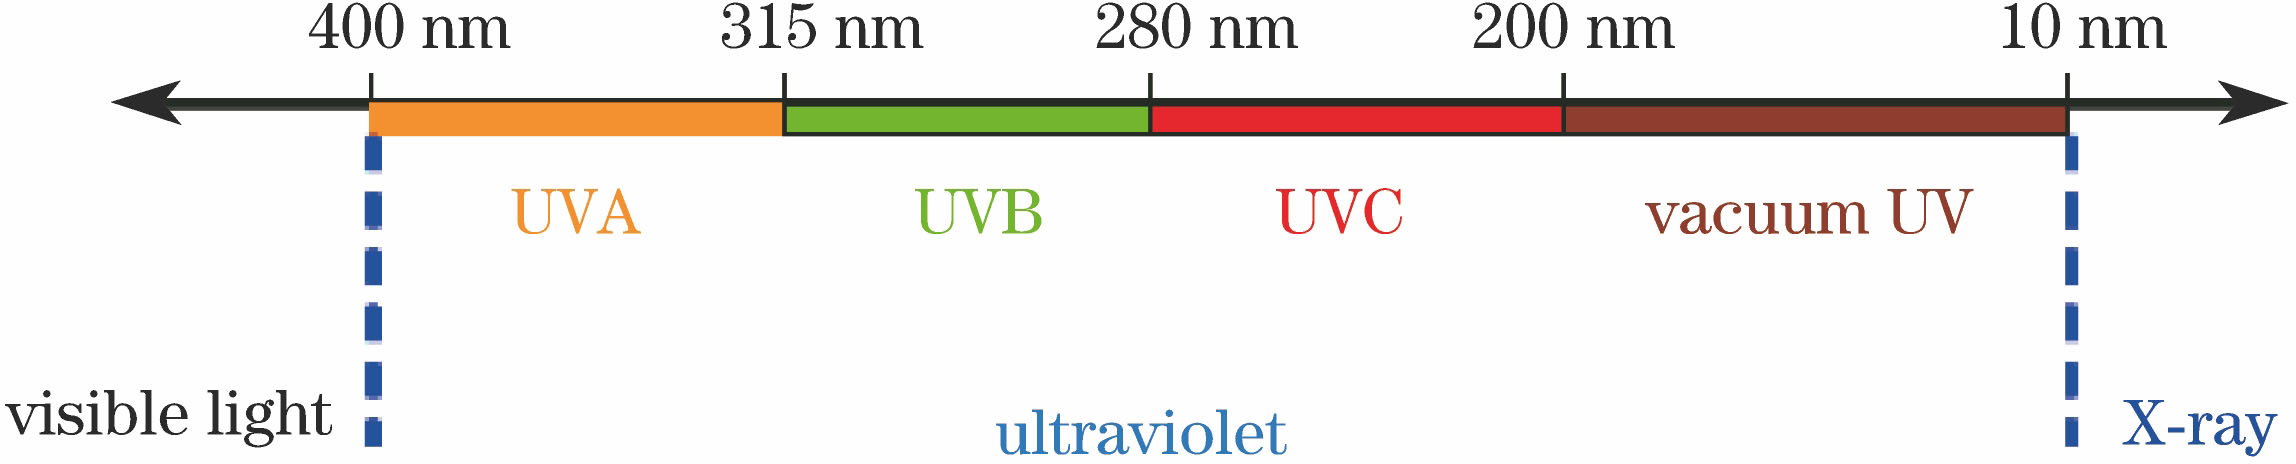 Classification of ultraviolet light